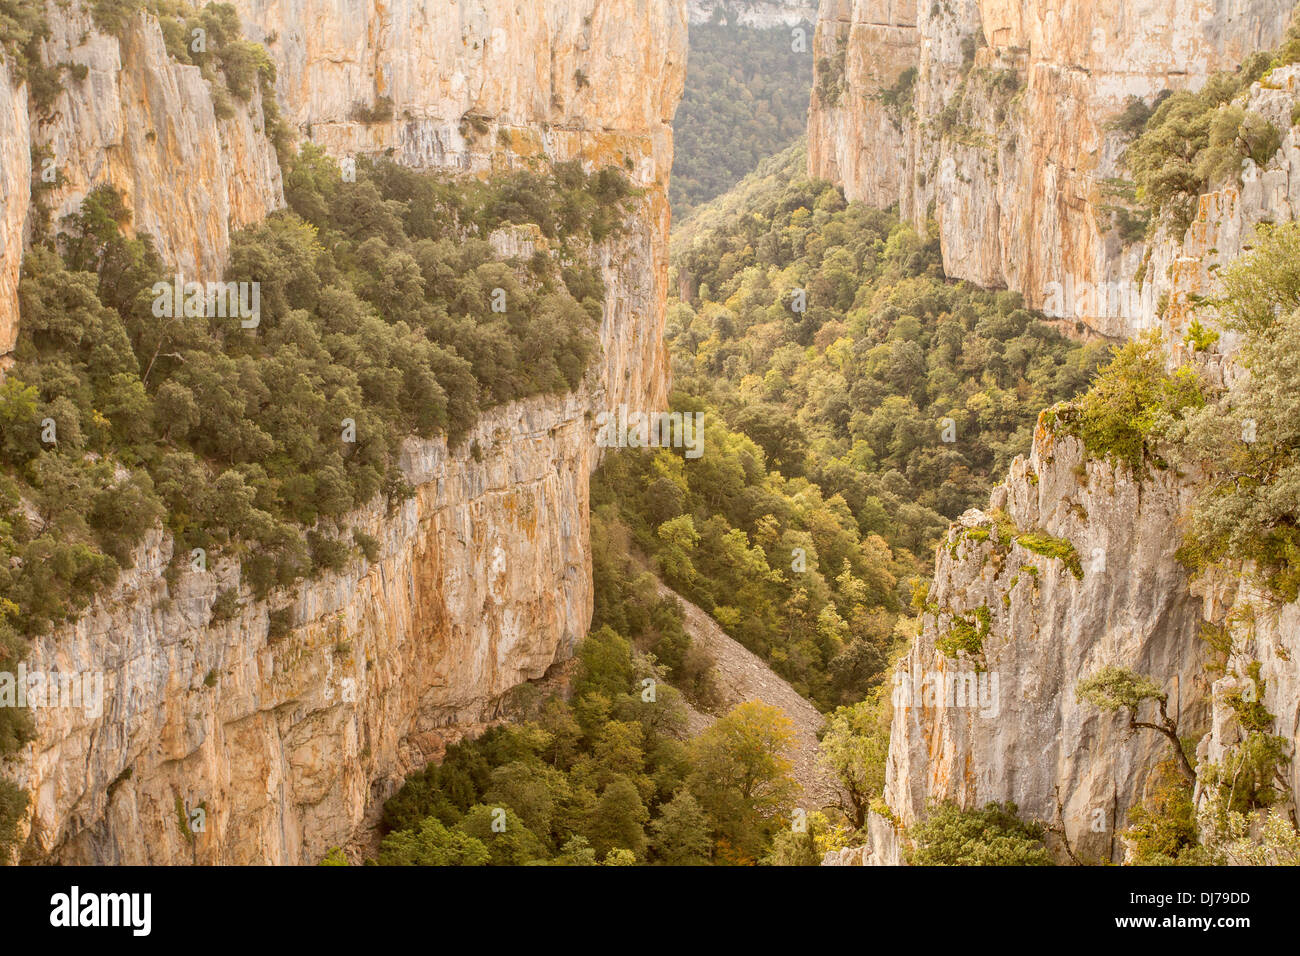 Natural reserve of Arbayun Gorge, Navarre, Spain Stock Photo